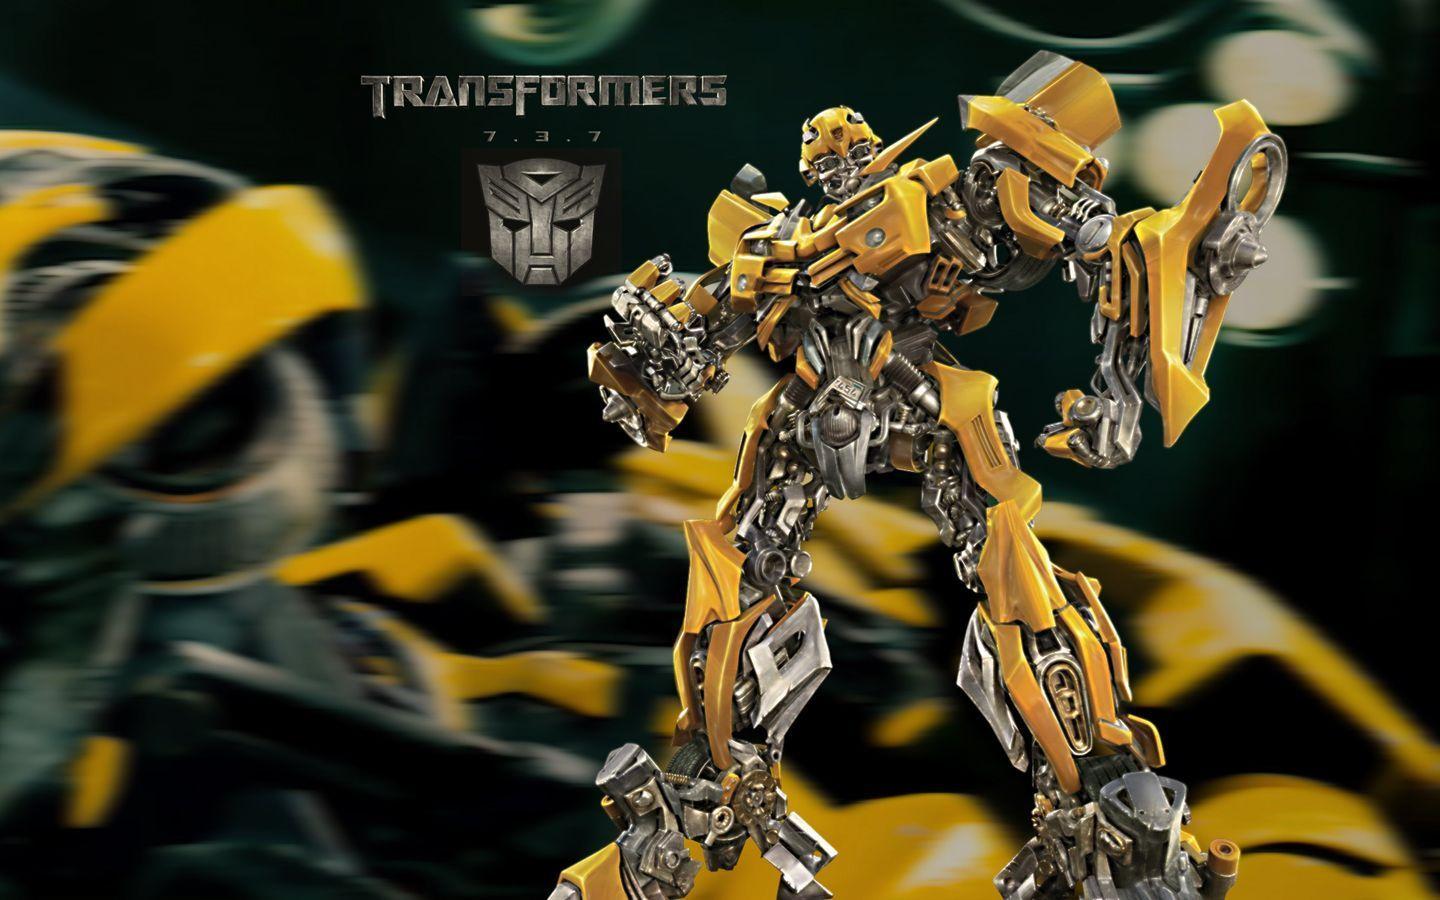 Transformers 2 Bumblebee Camaro Wallpaper